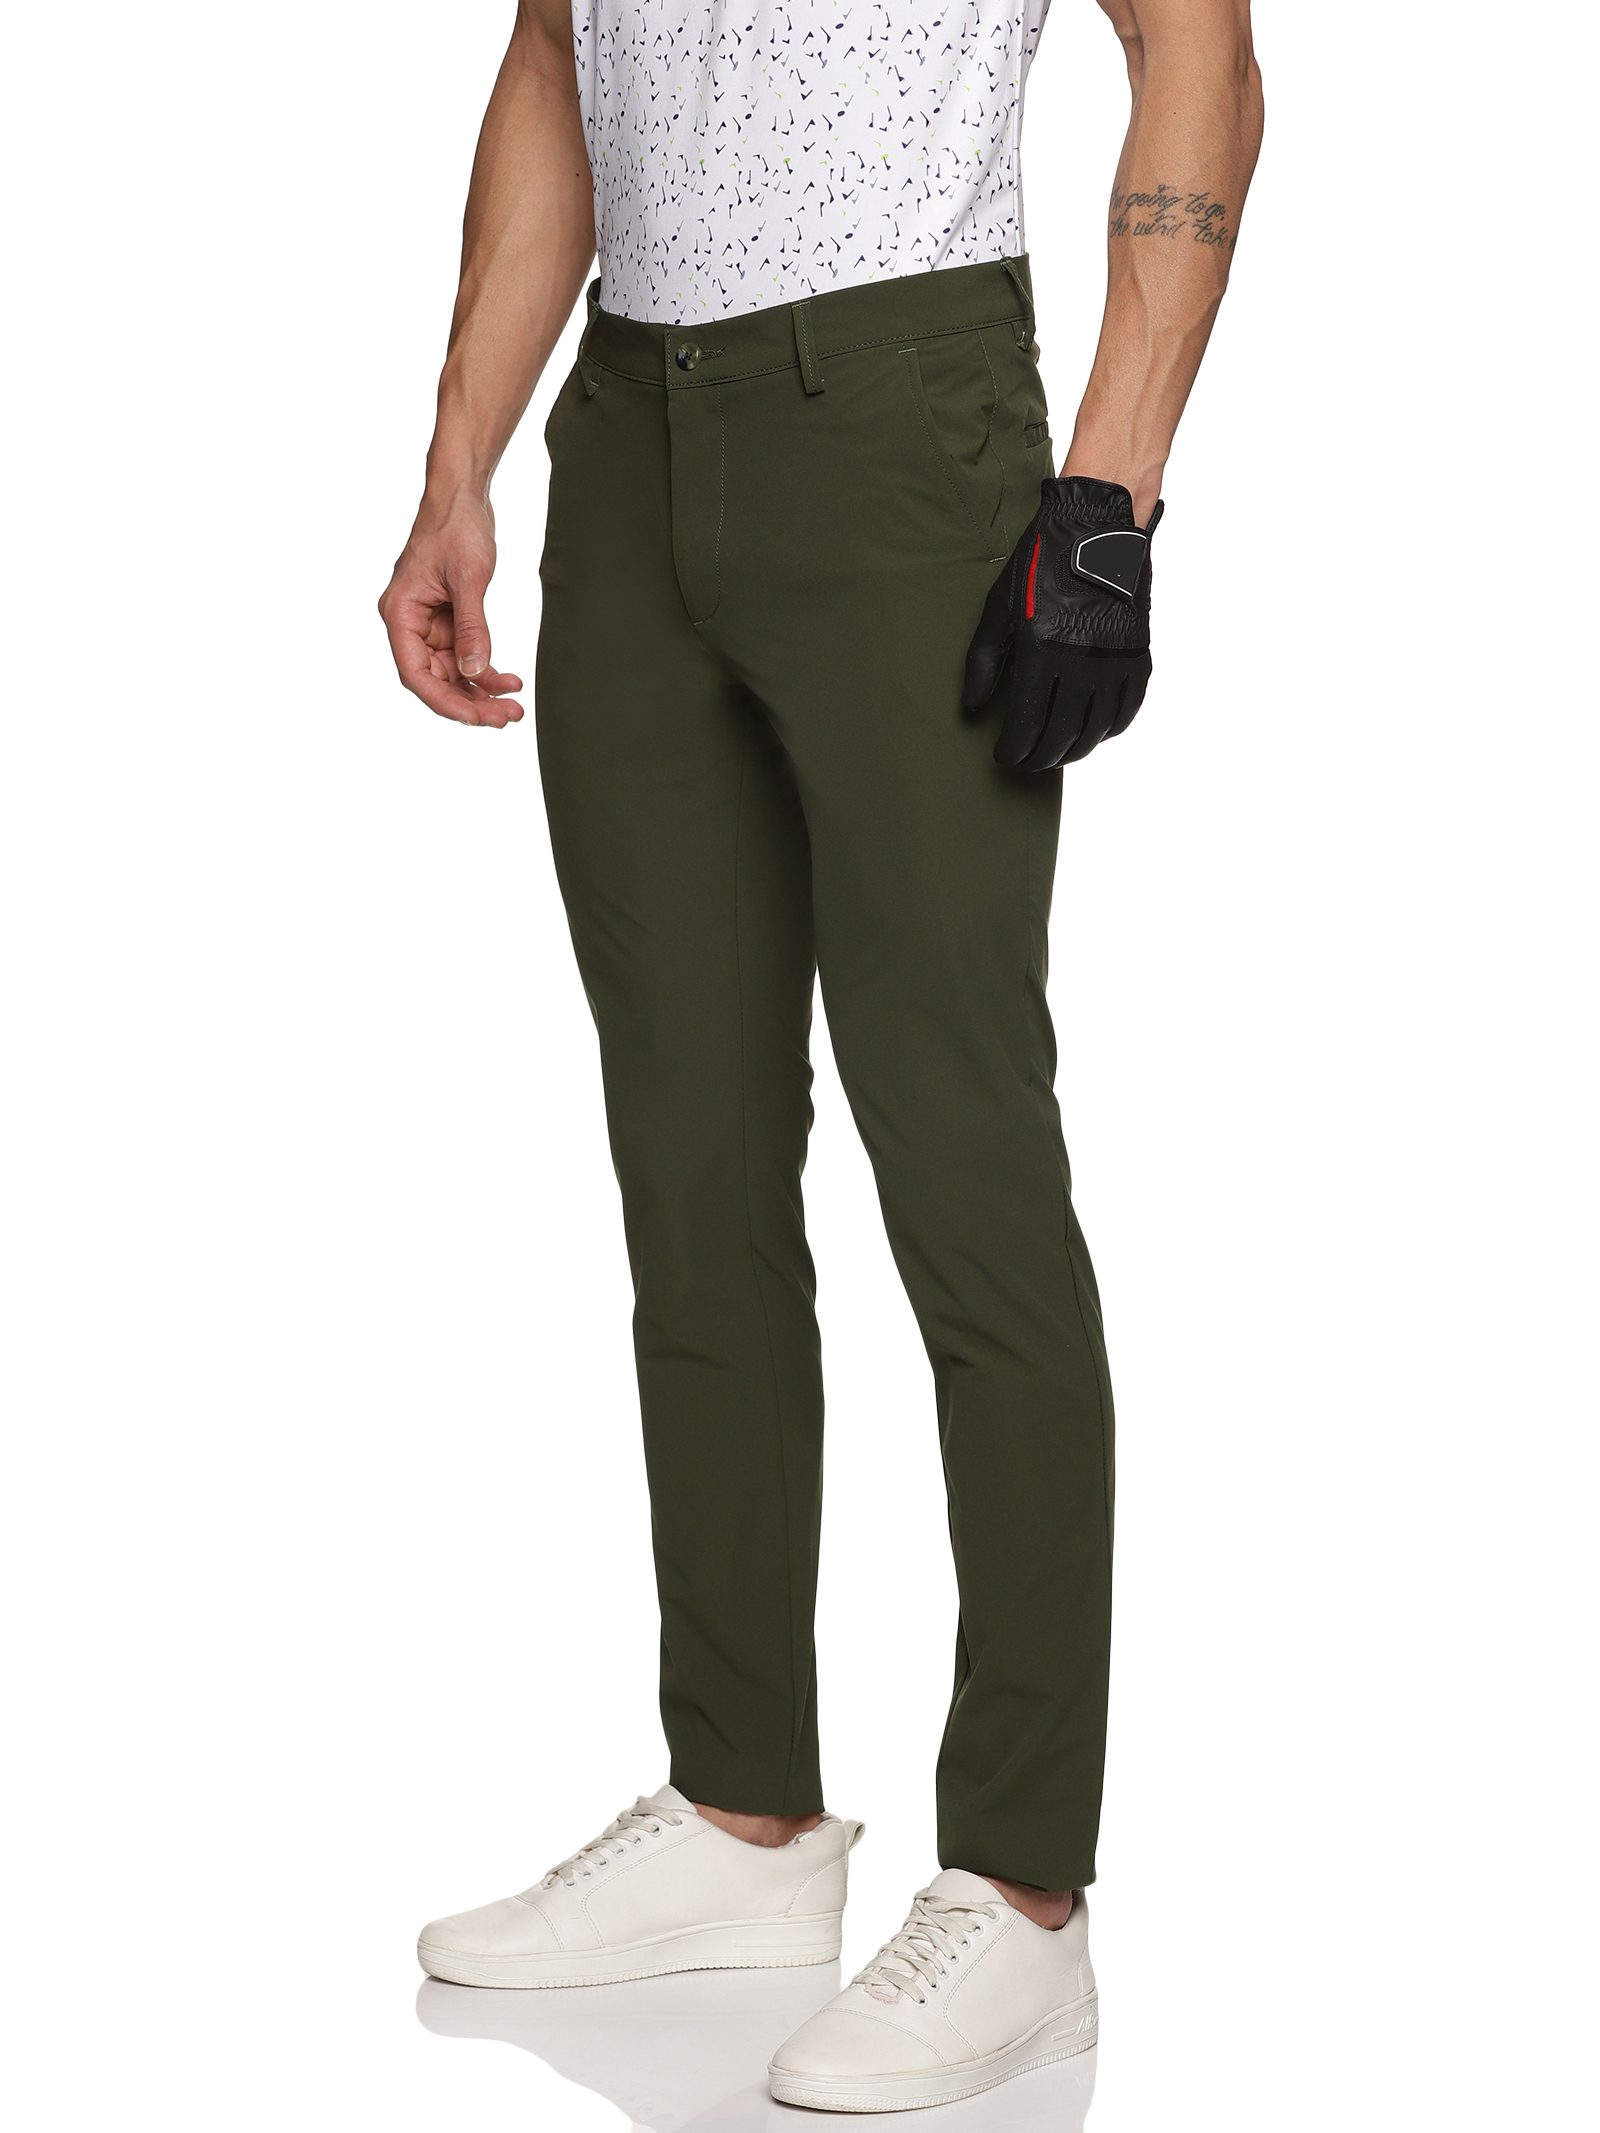 Men's Active Golf Trousers- Olive Green (Flexi Waist) - styzen.in